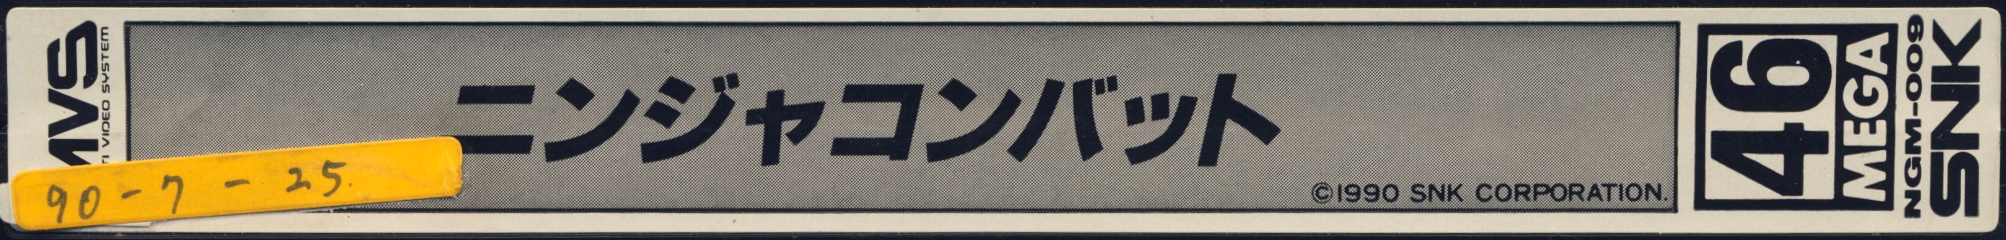 Ninja combat jp label.jpg